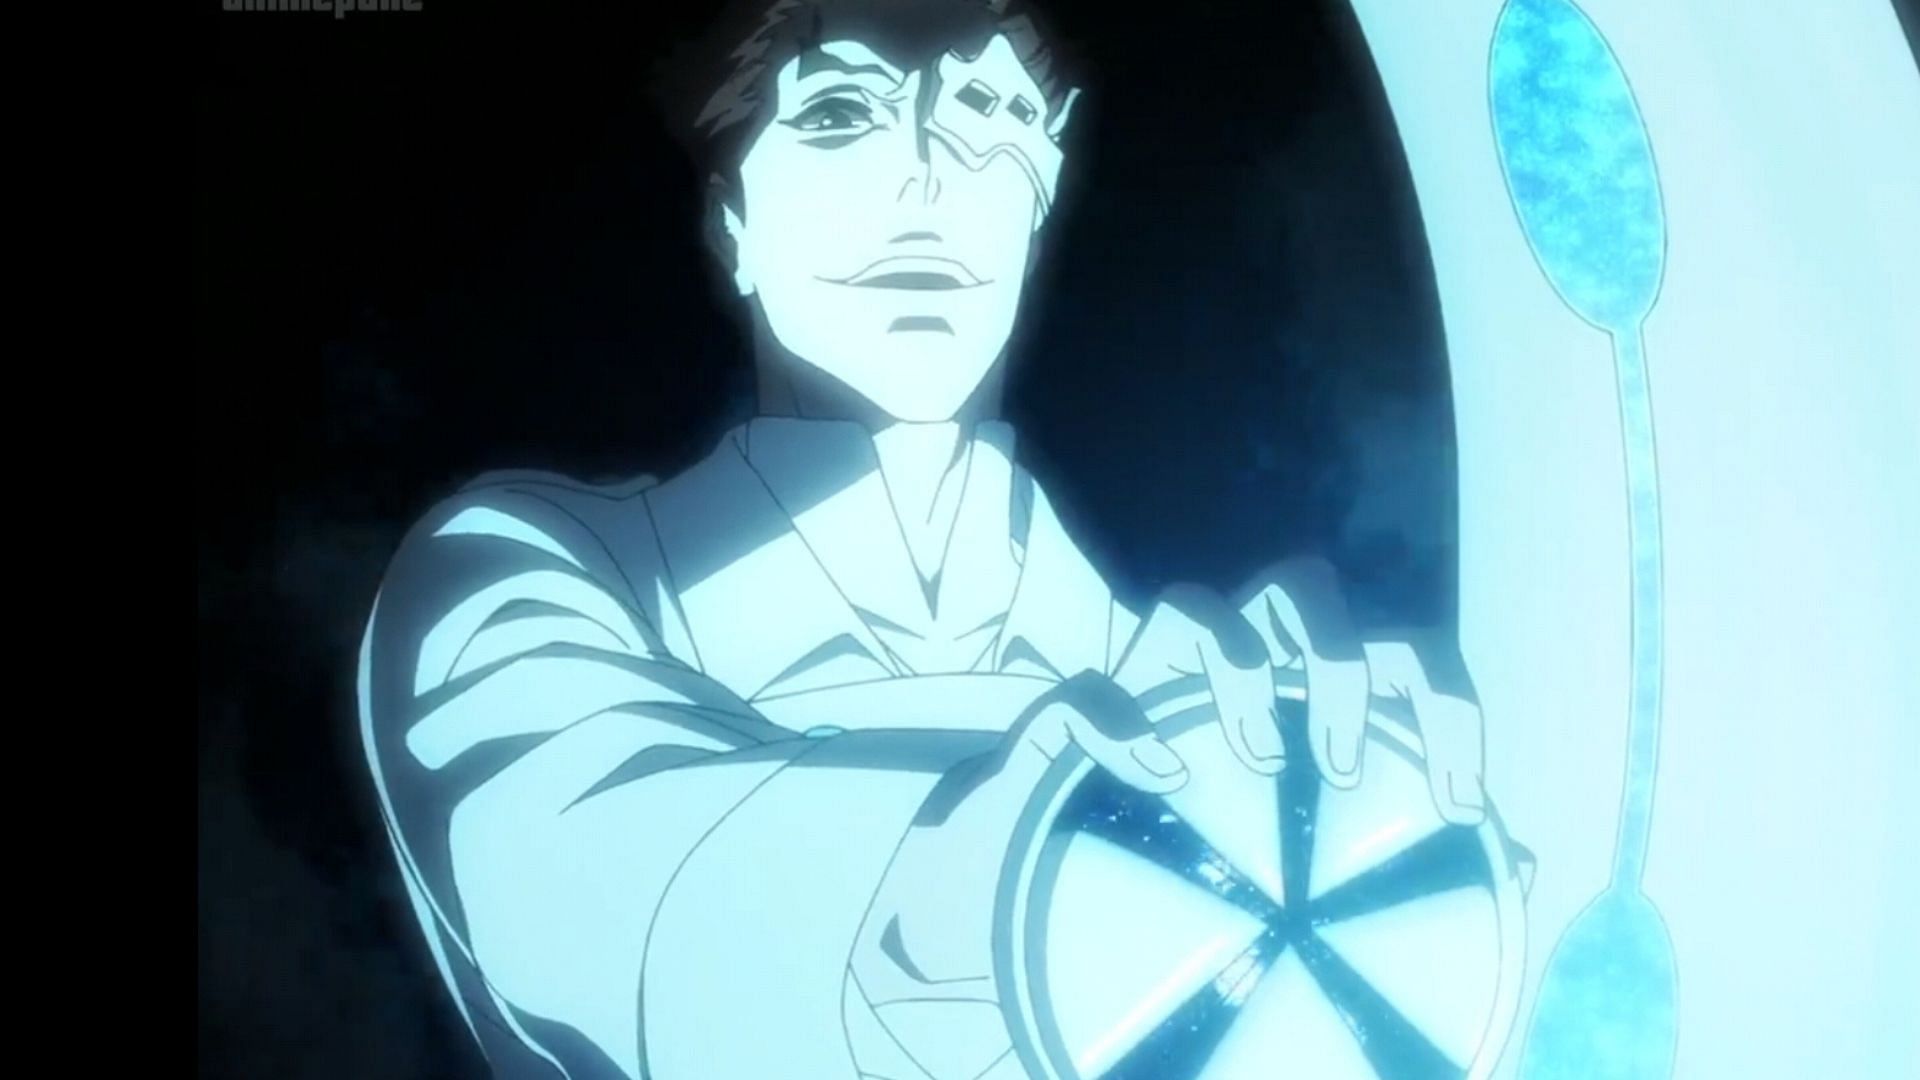 Ebern using Quincy medallion as seen in the anime Bleach (Image via Studio Pierrot)